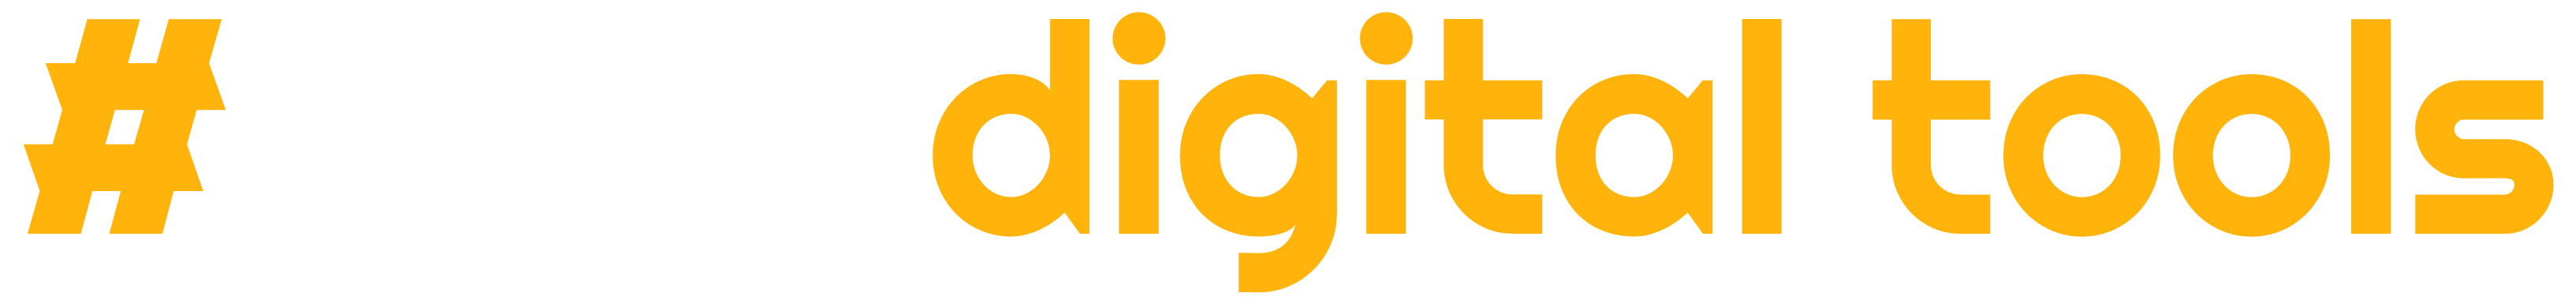 Hash Digital Tools Logo